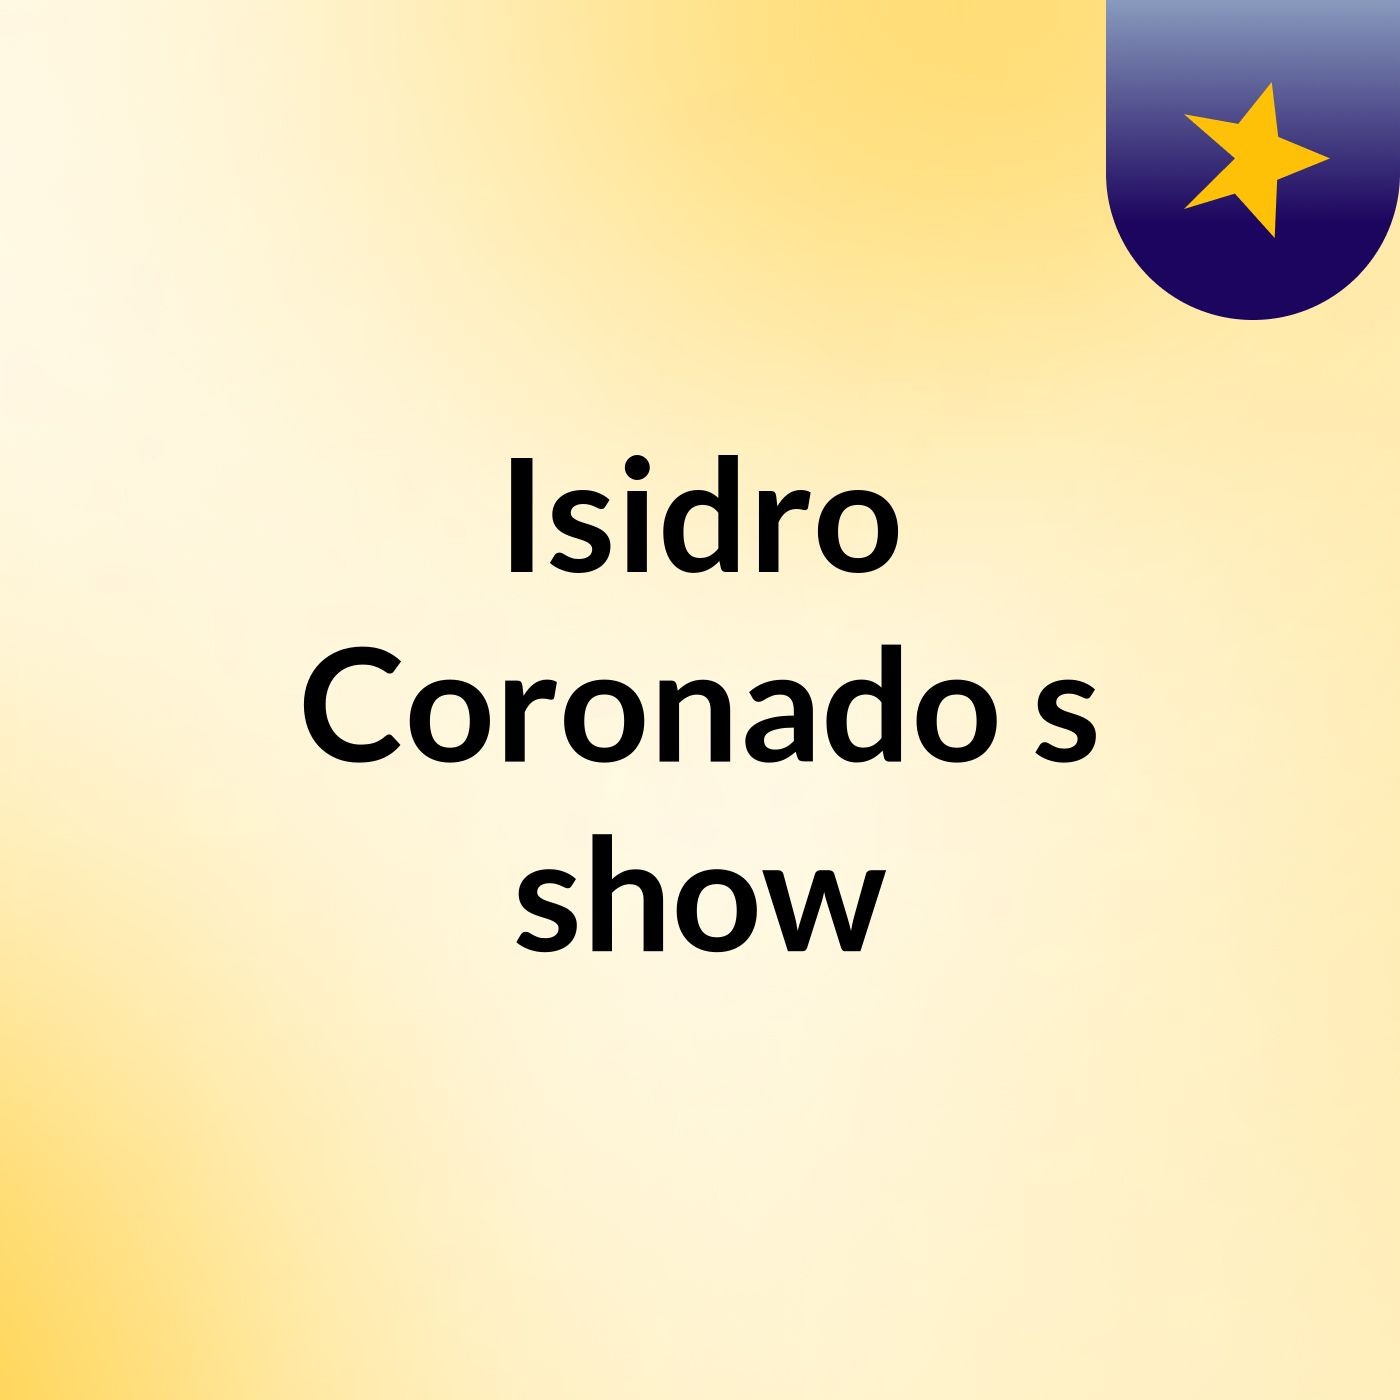 Isidro Coronado's show